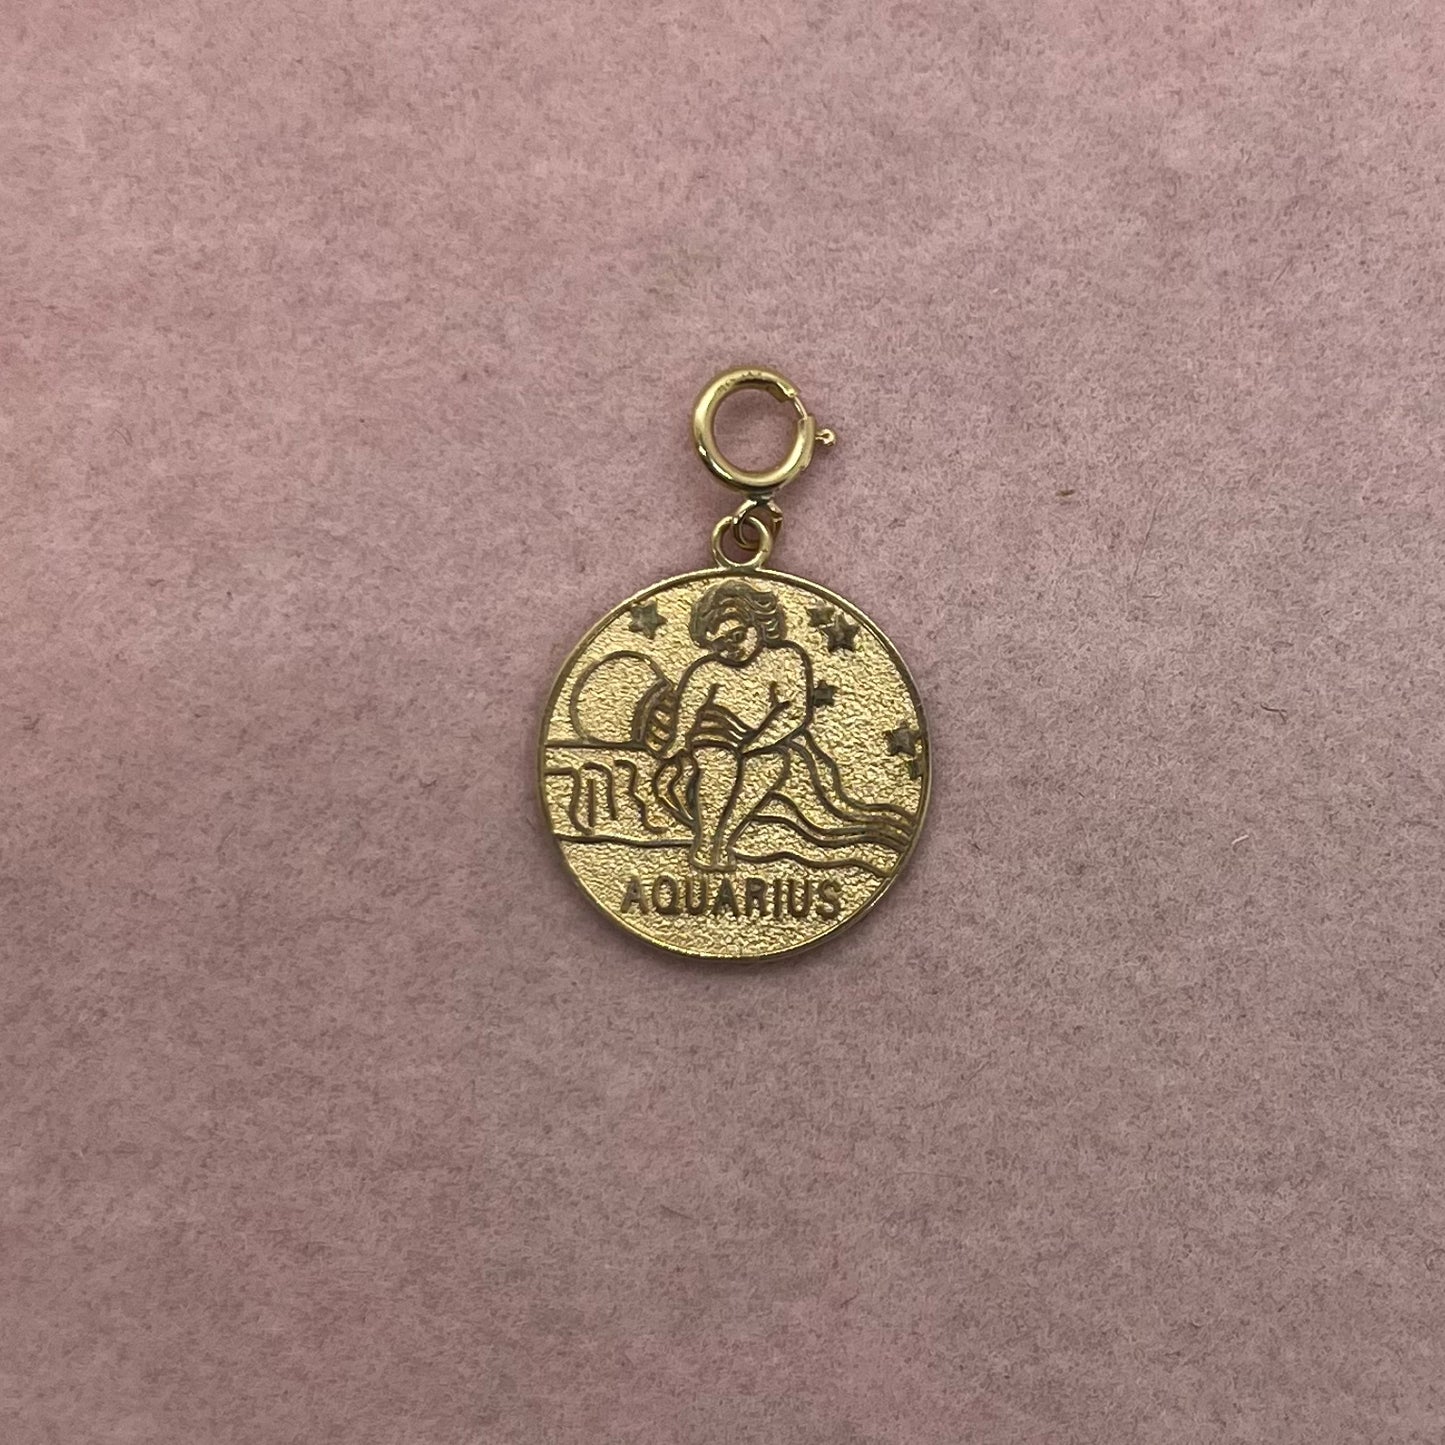 Aquarius Medallion by Michael Anthony